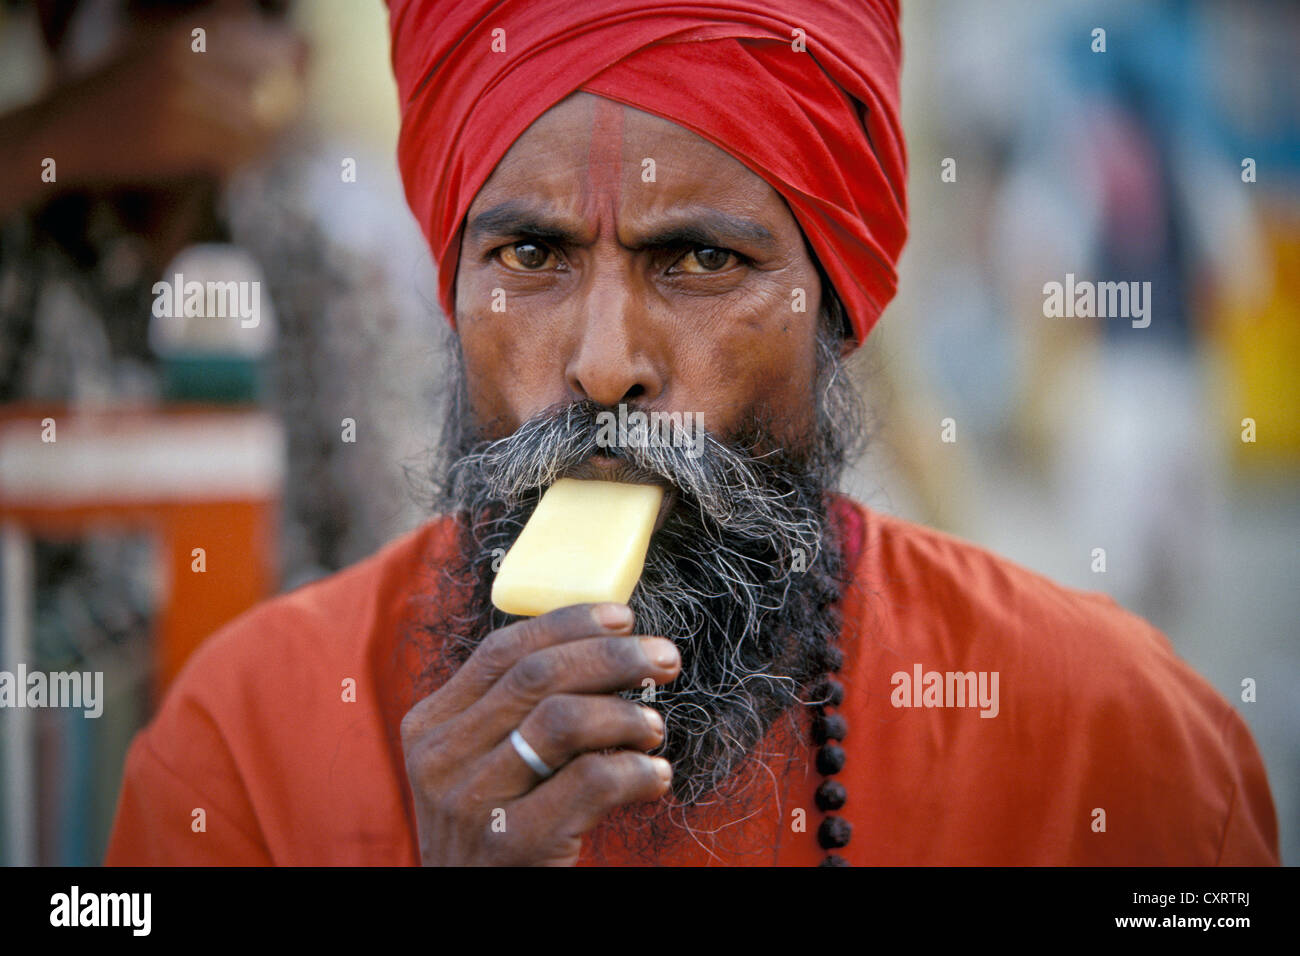 Sadhu avec un turban rouge manger une glace, Kashi, Varanasi ou Benares, Uttar Pradesh, Inde du Nord, Inde, Asie Banque D'Images